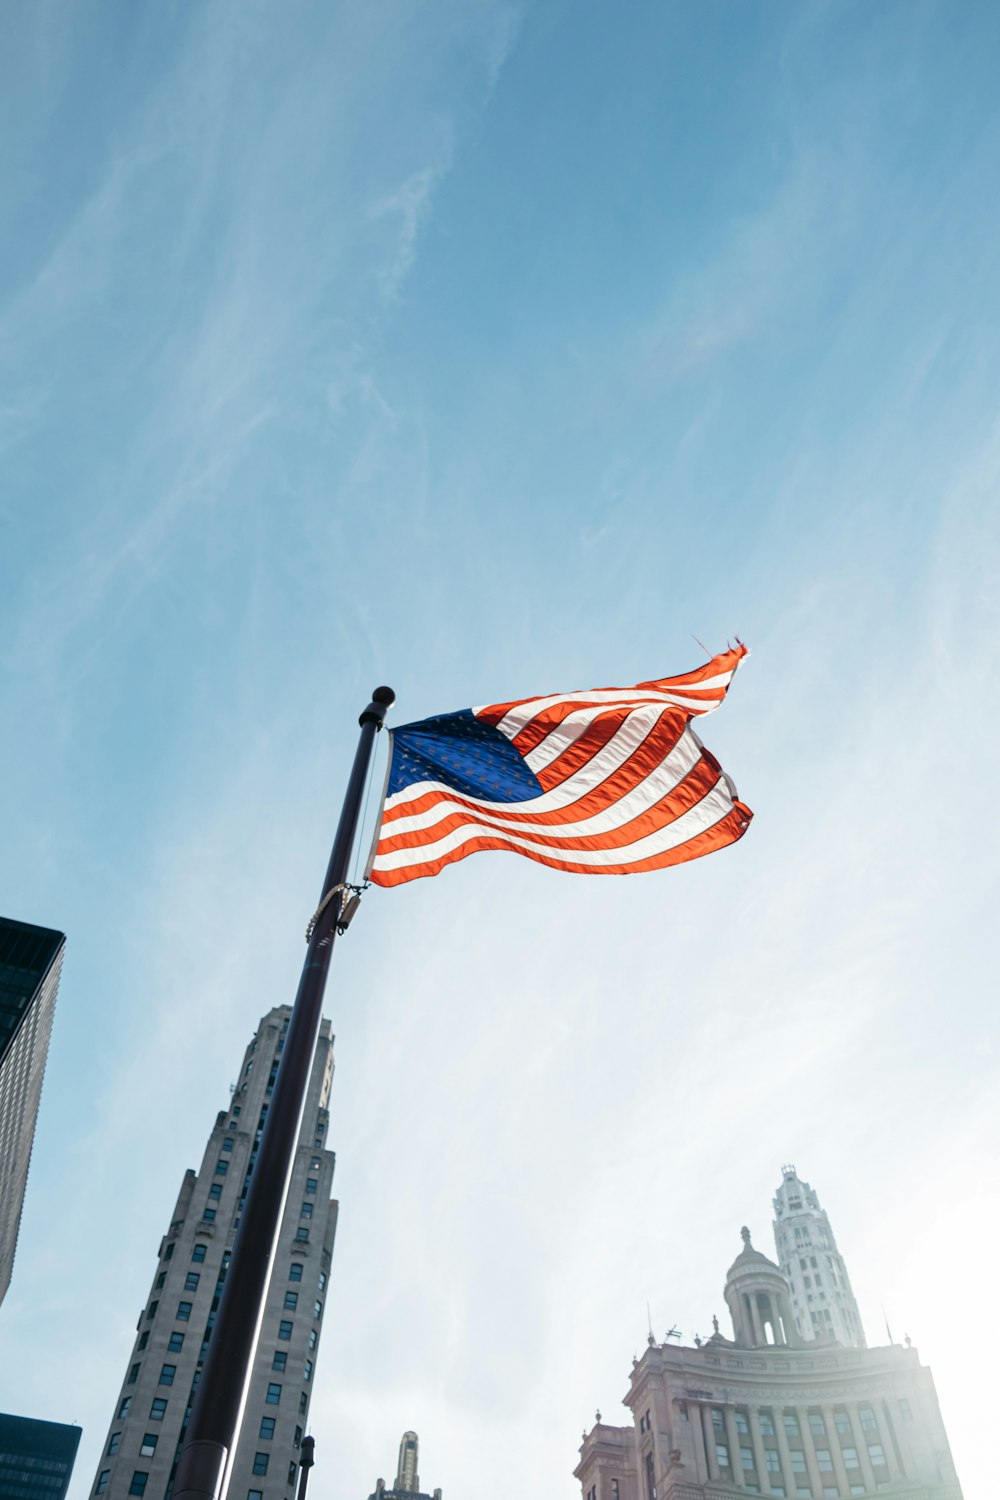 United States of America flag waving during daytime